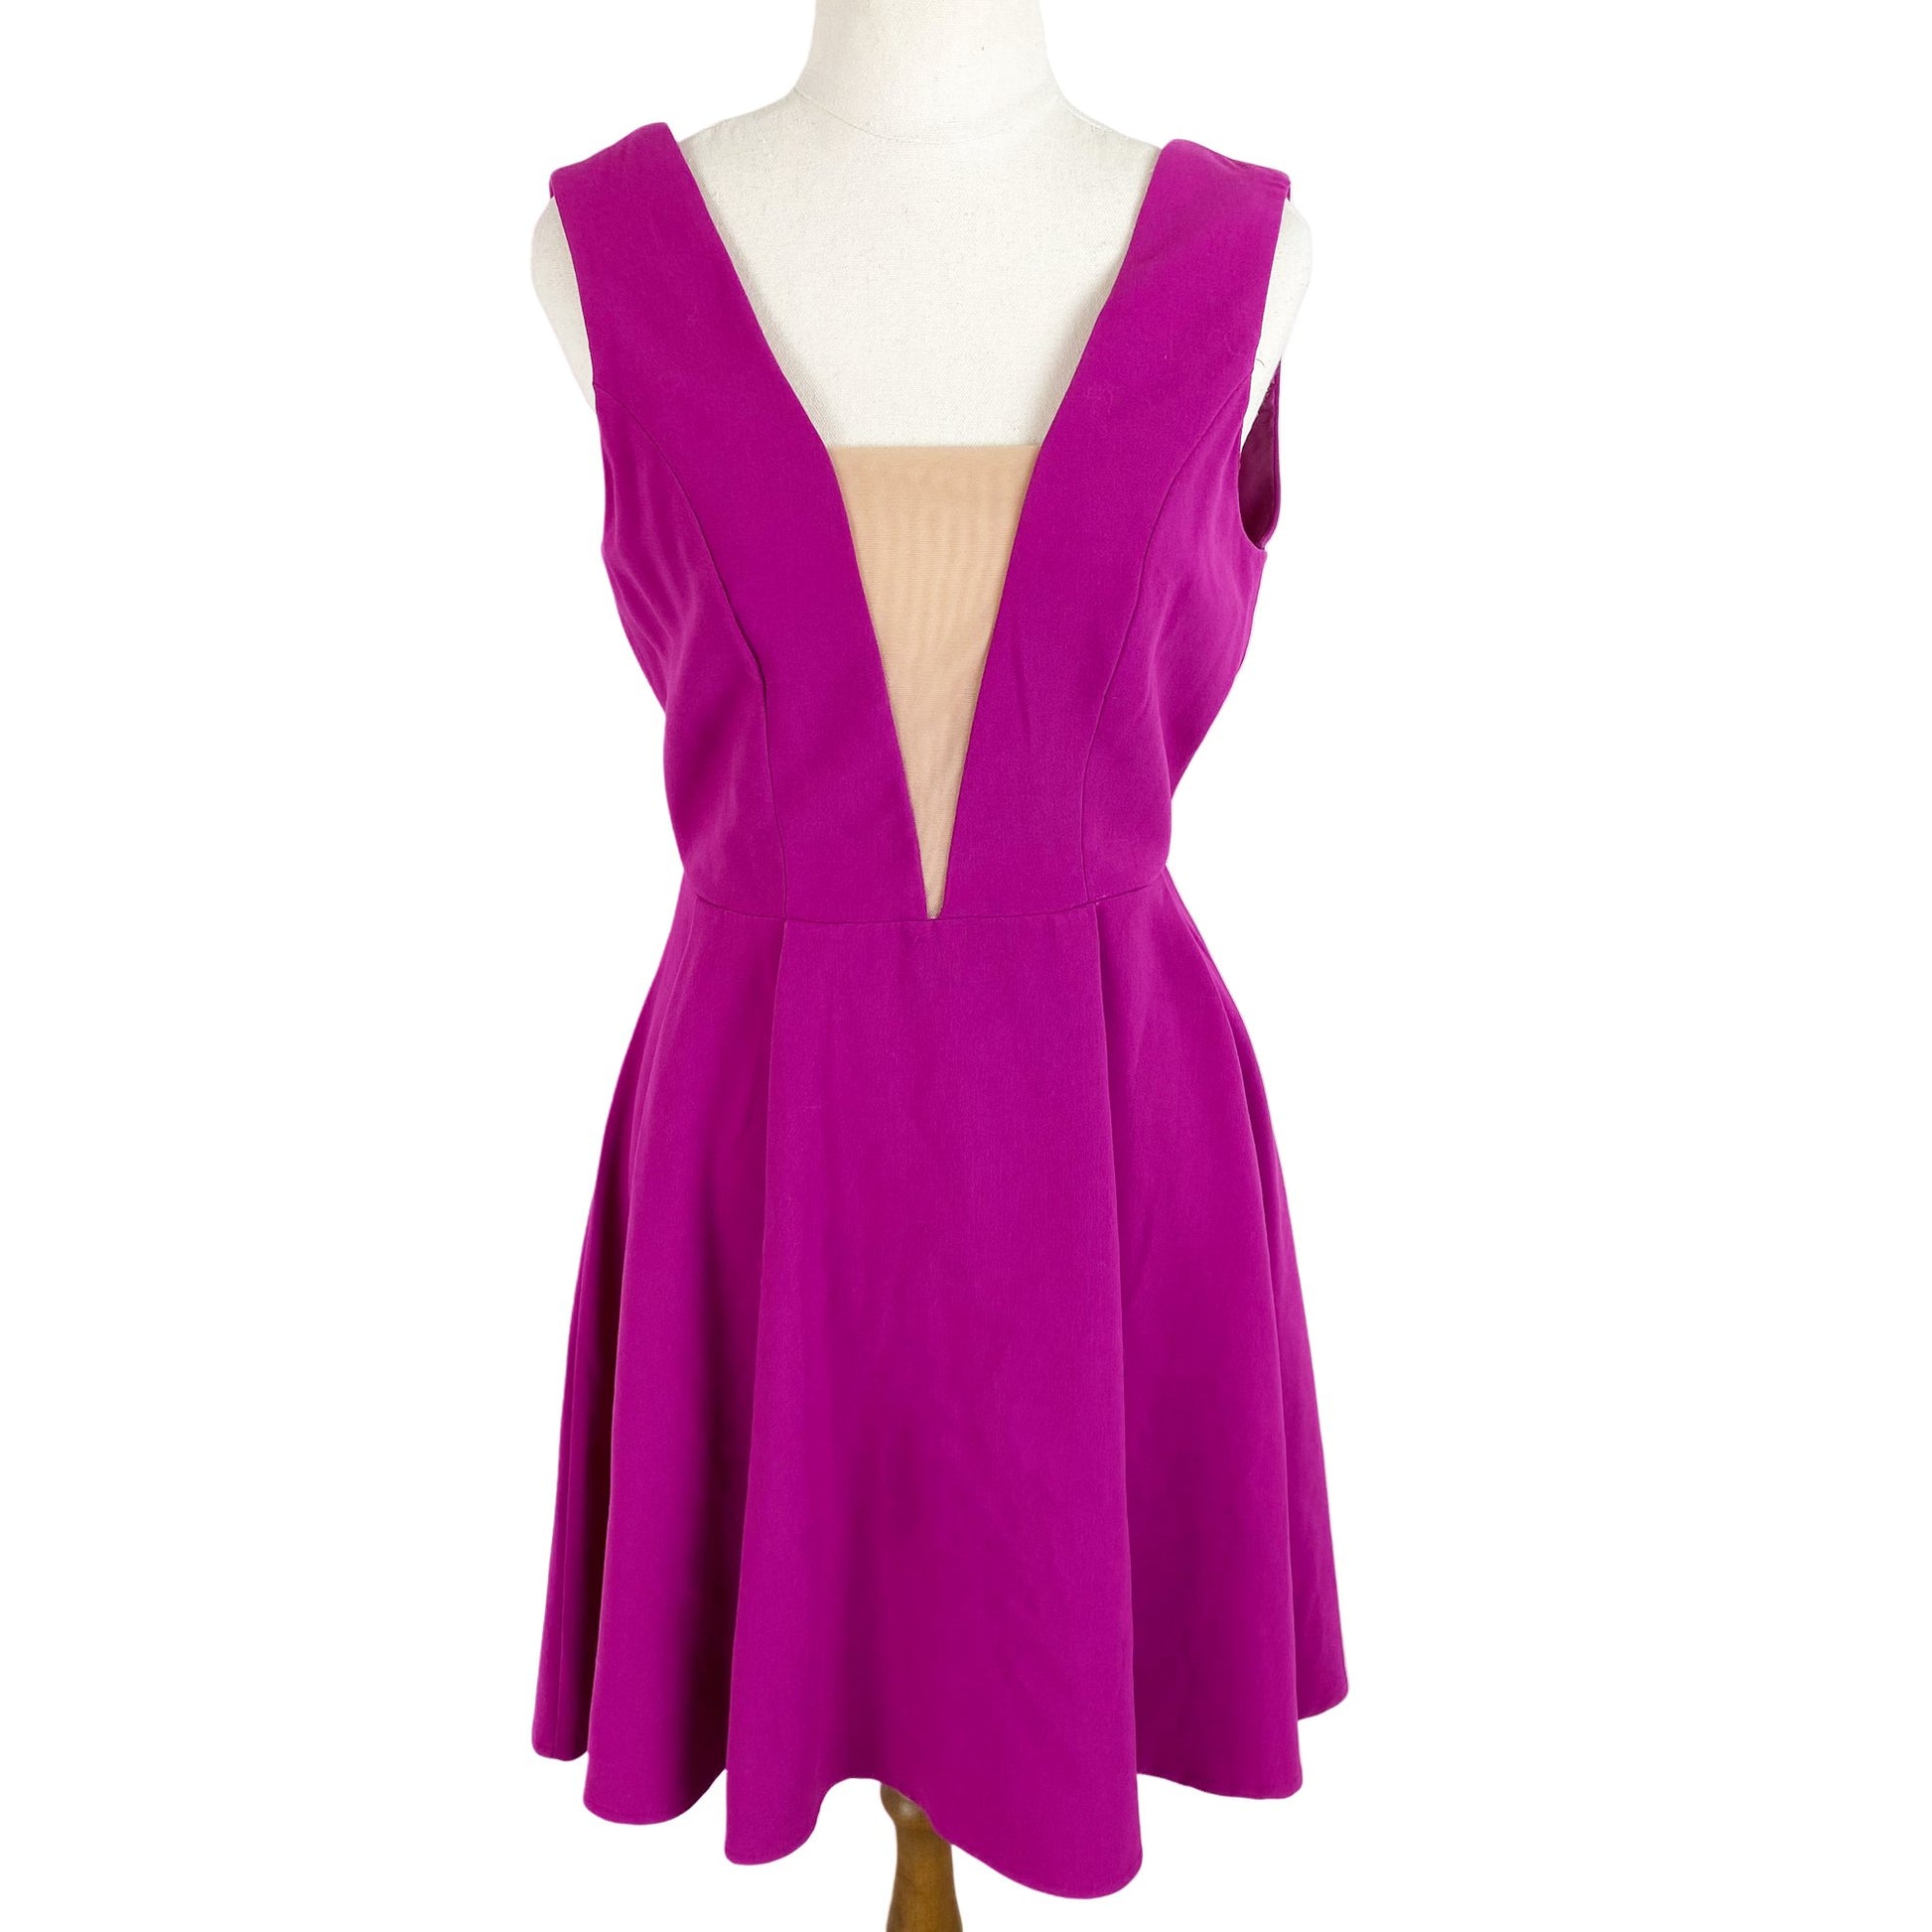 Asos purple sleeveless dress | size 10